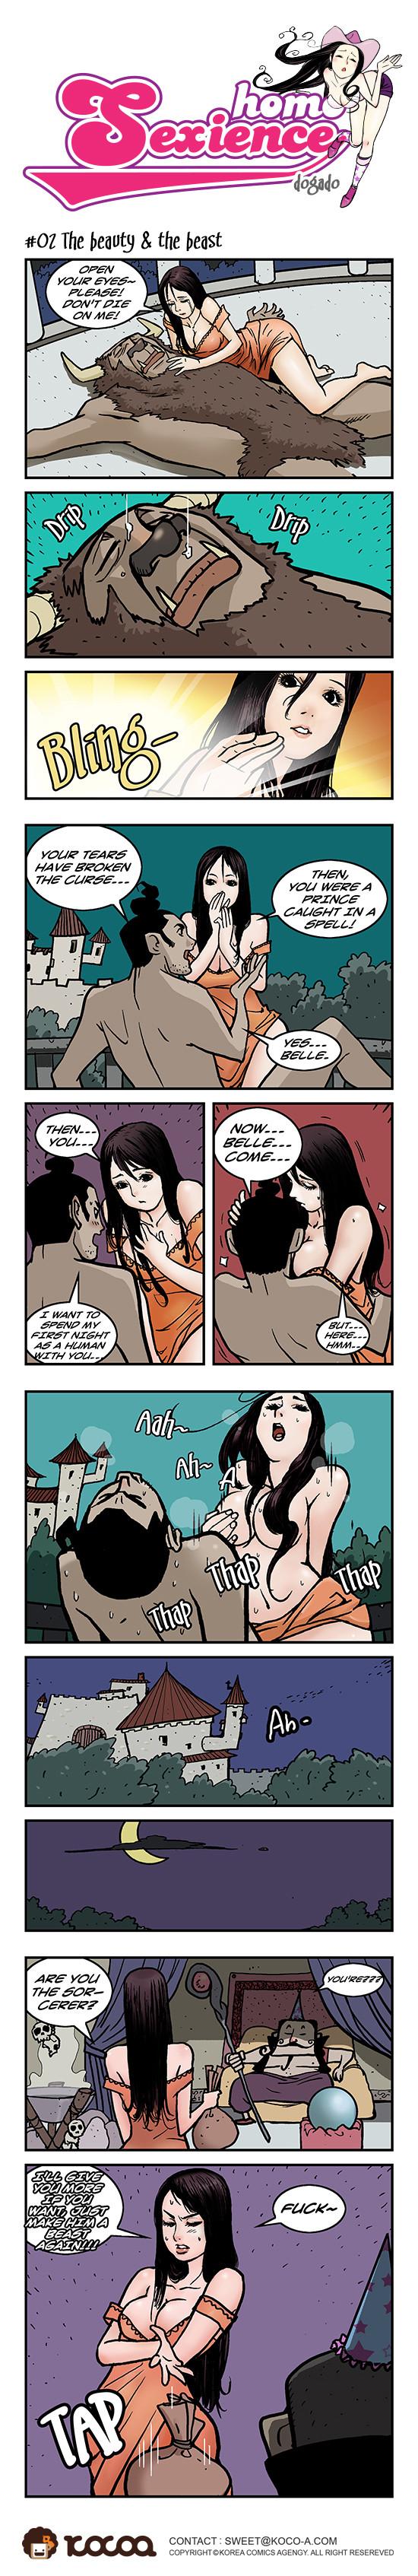 Tesao Homo Sexience Licking Pussy - Page 2